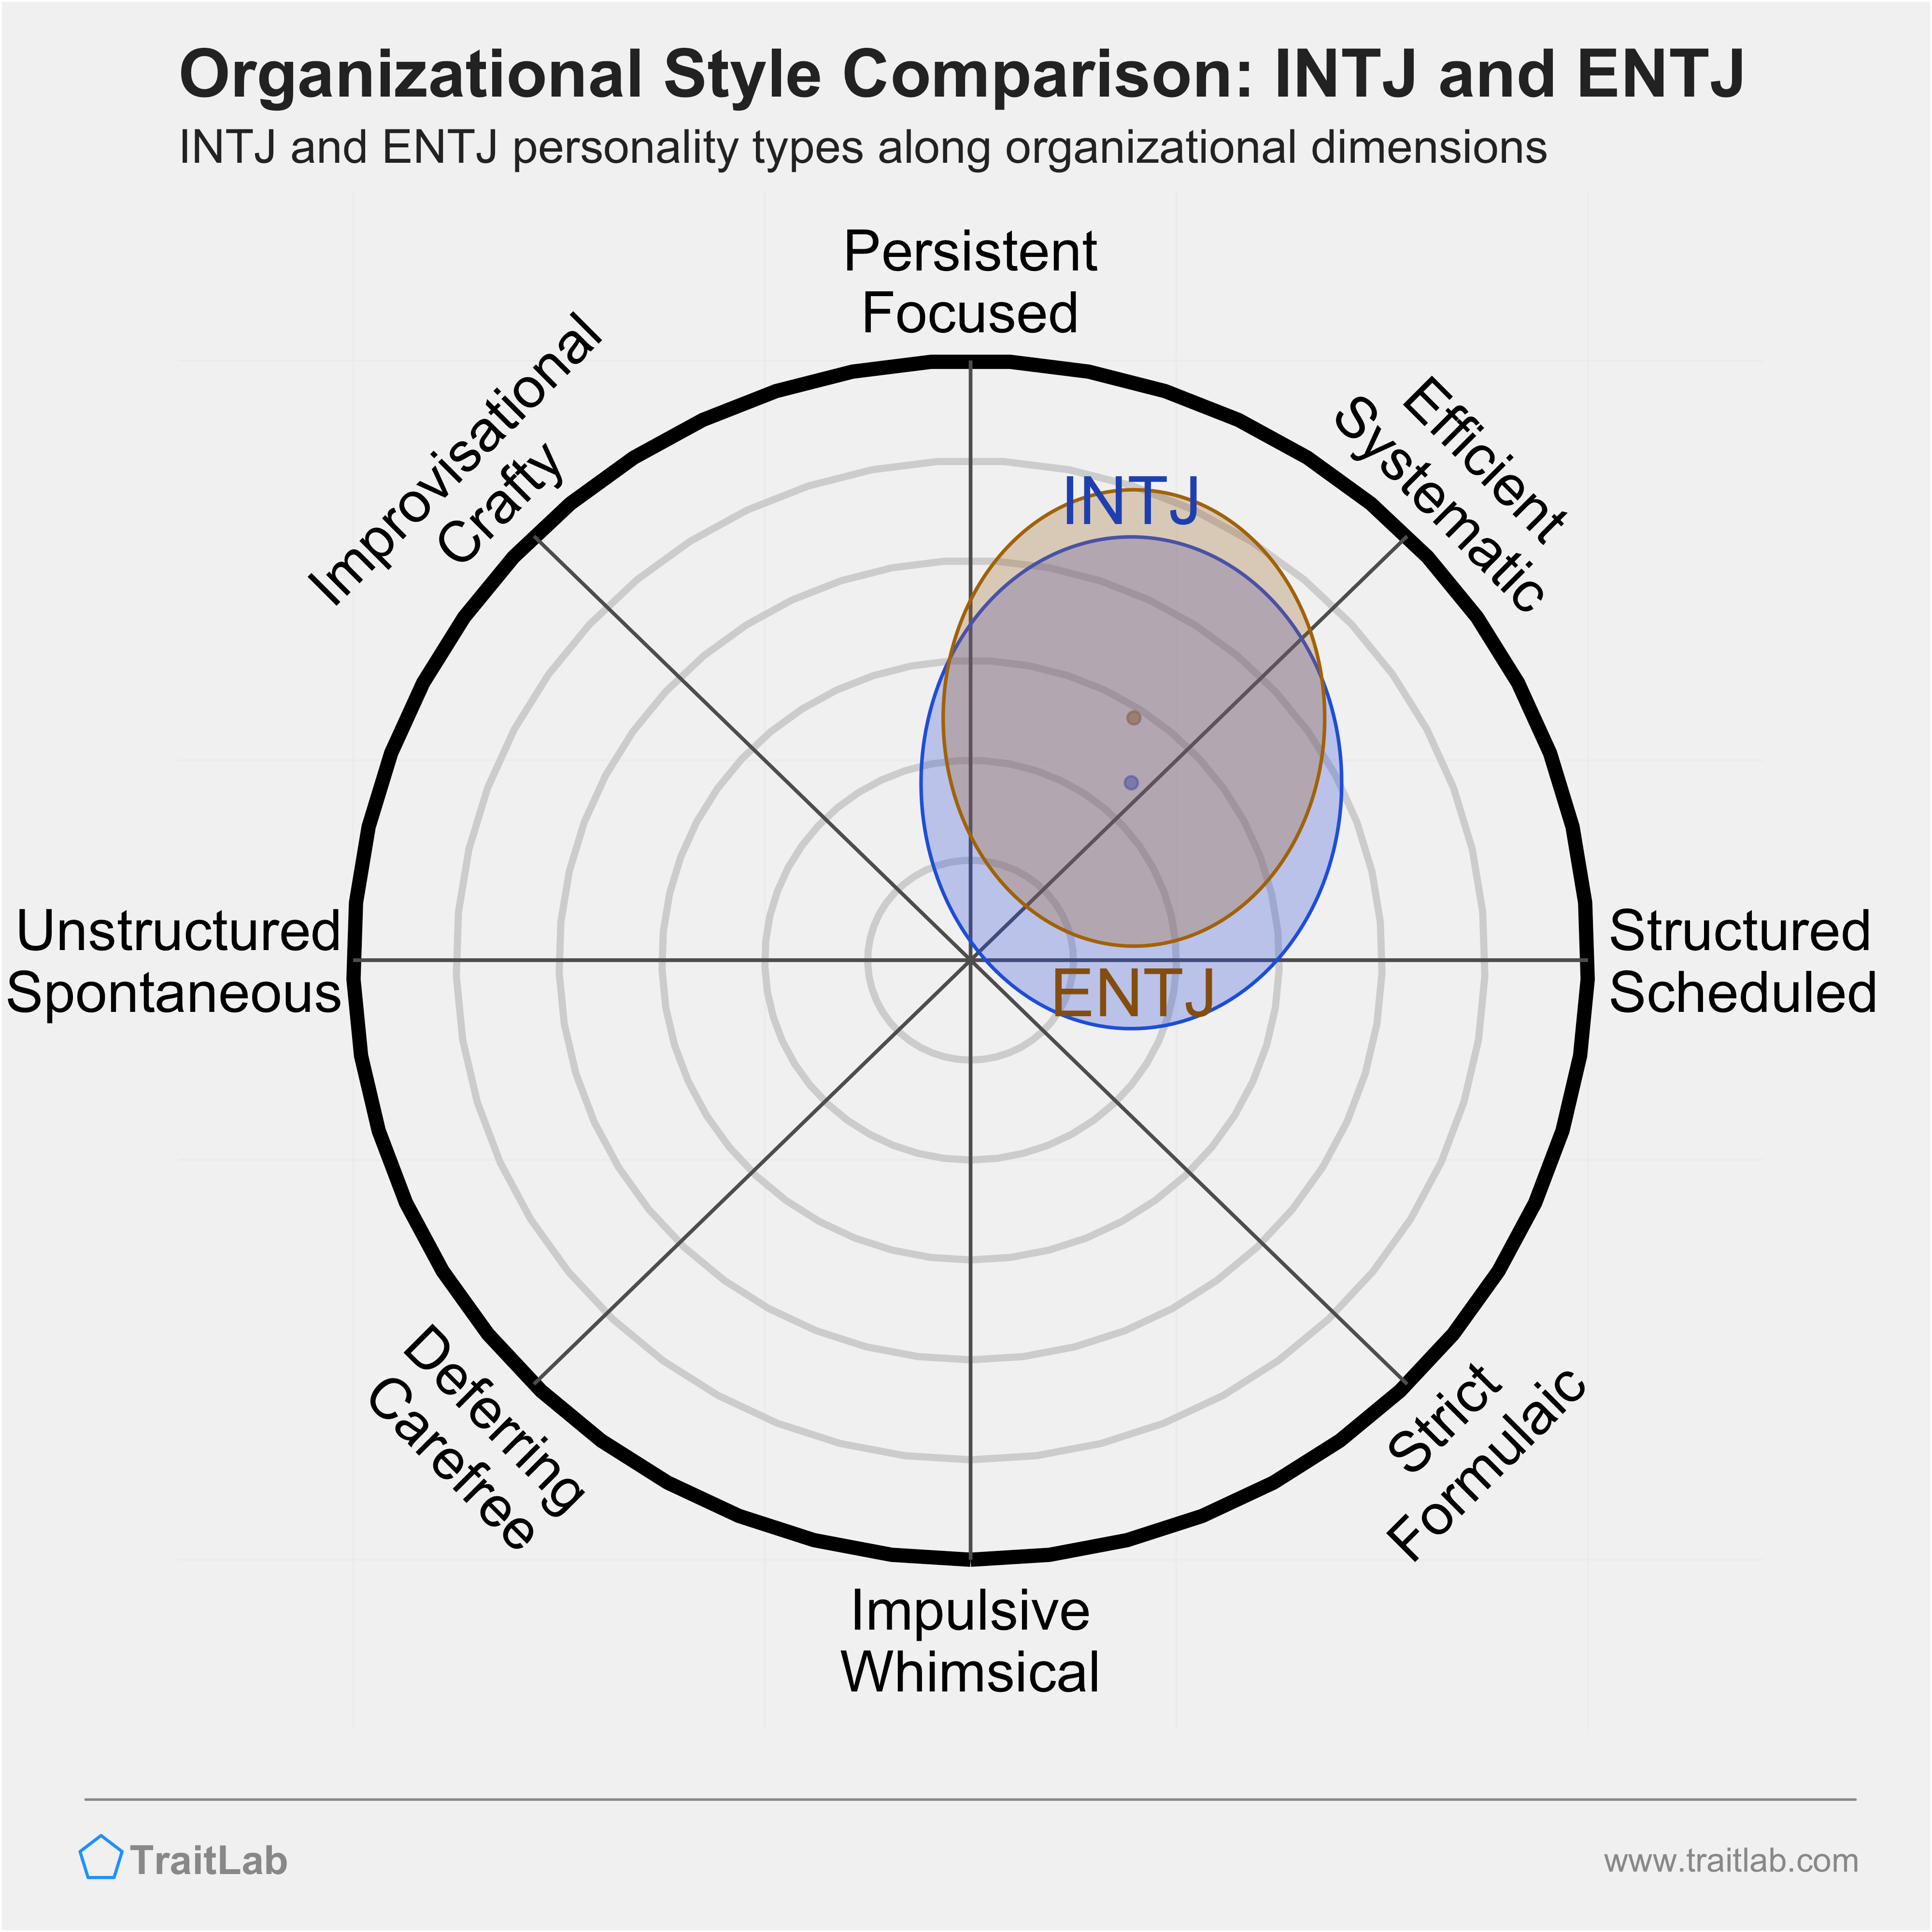 INTJ and ENTJ comparison across organizational dimensions